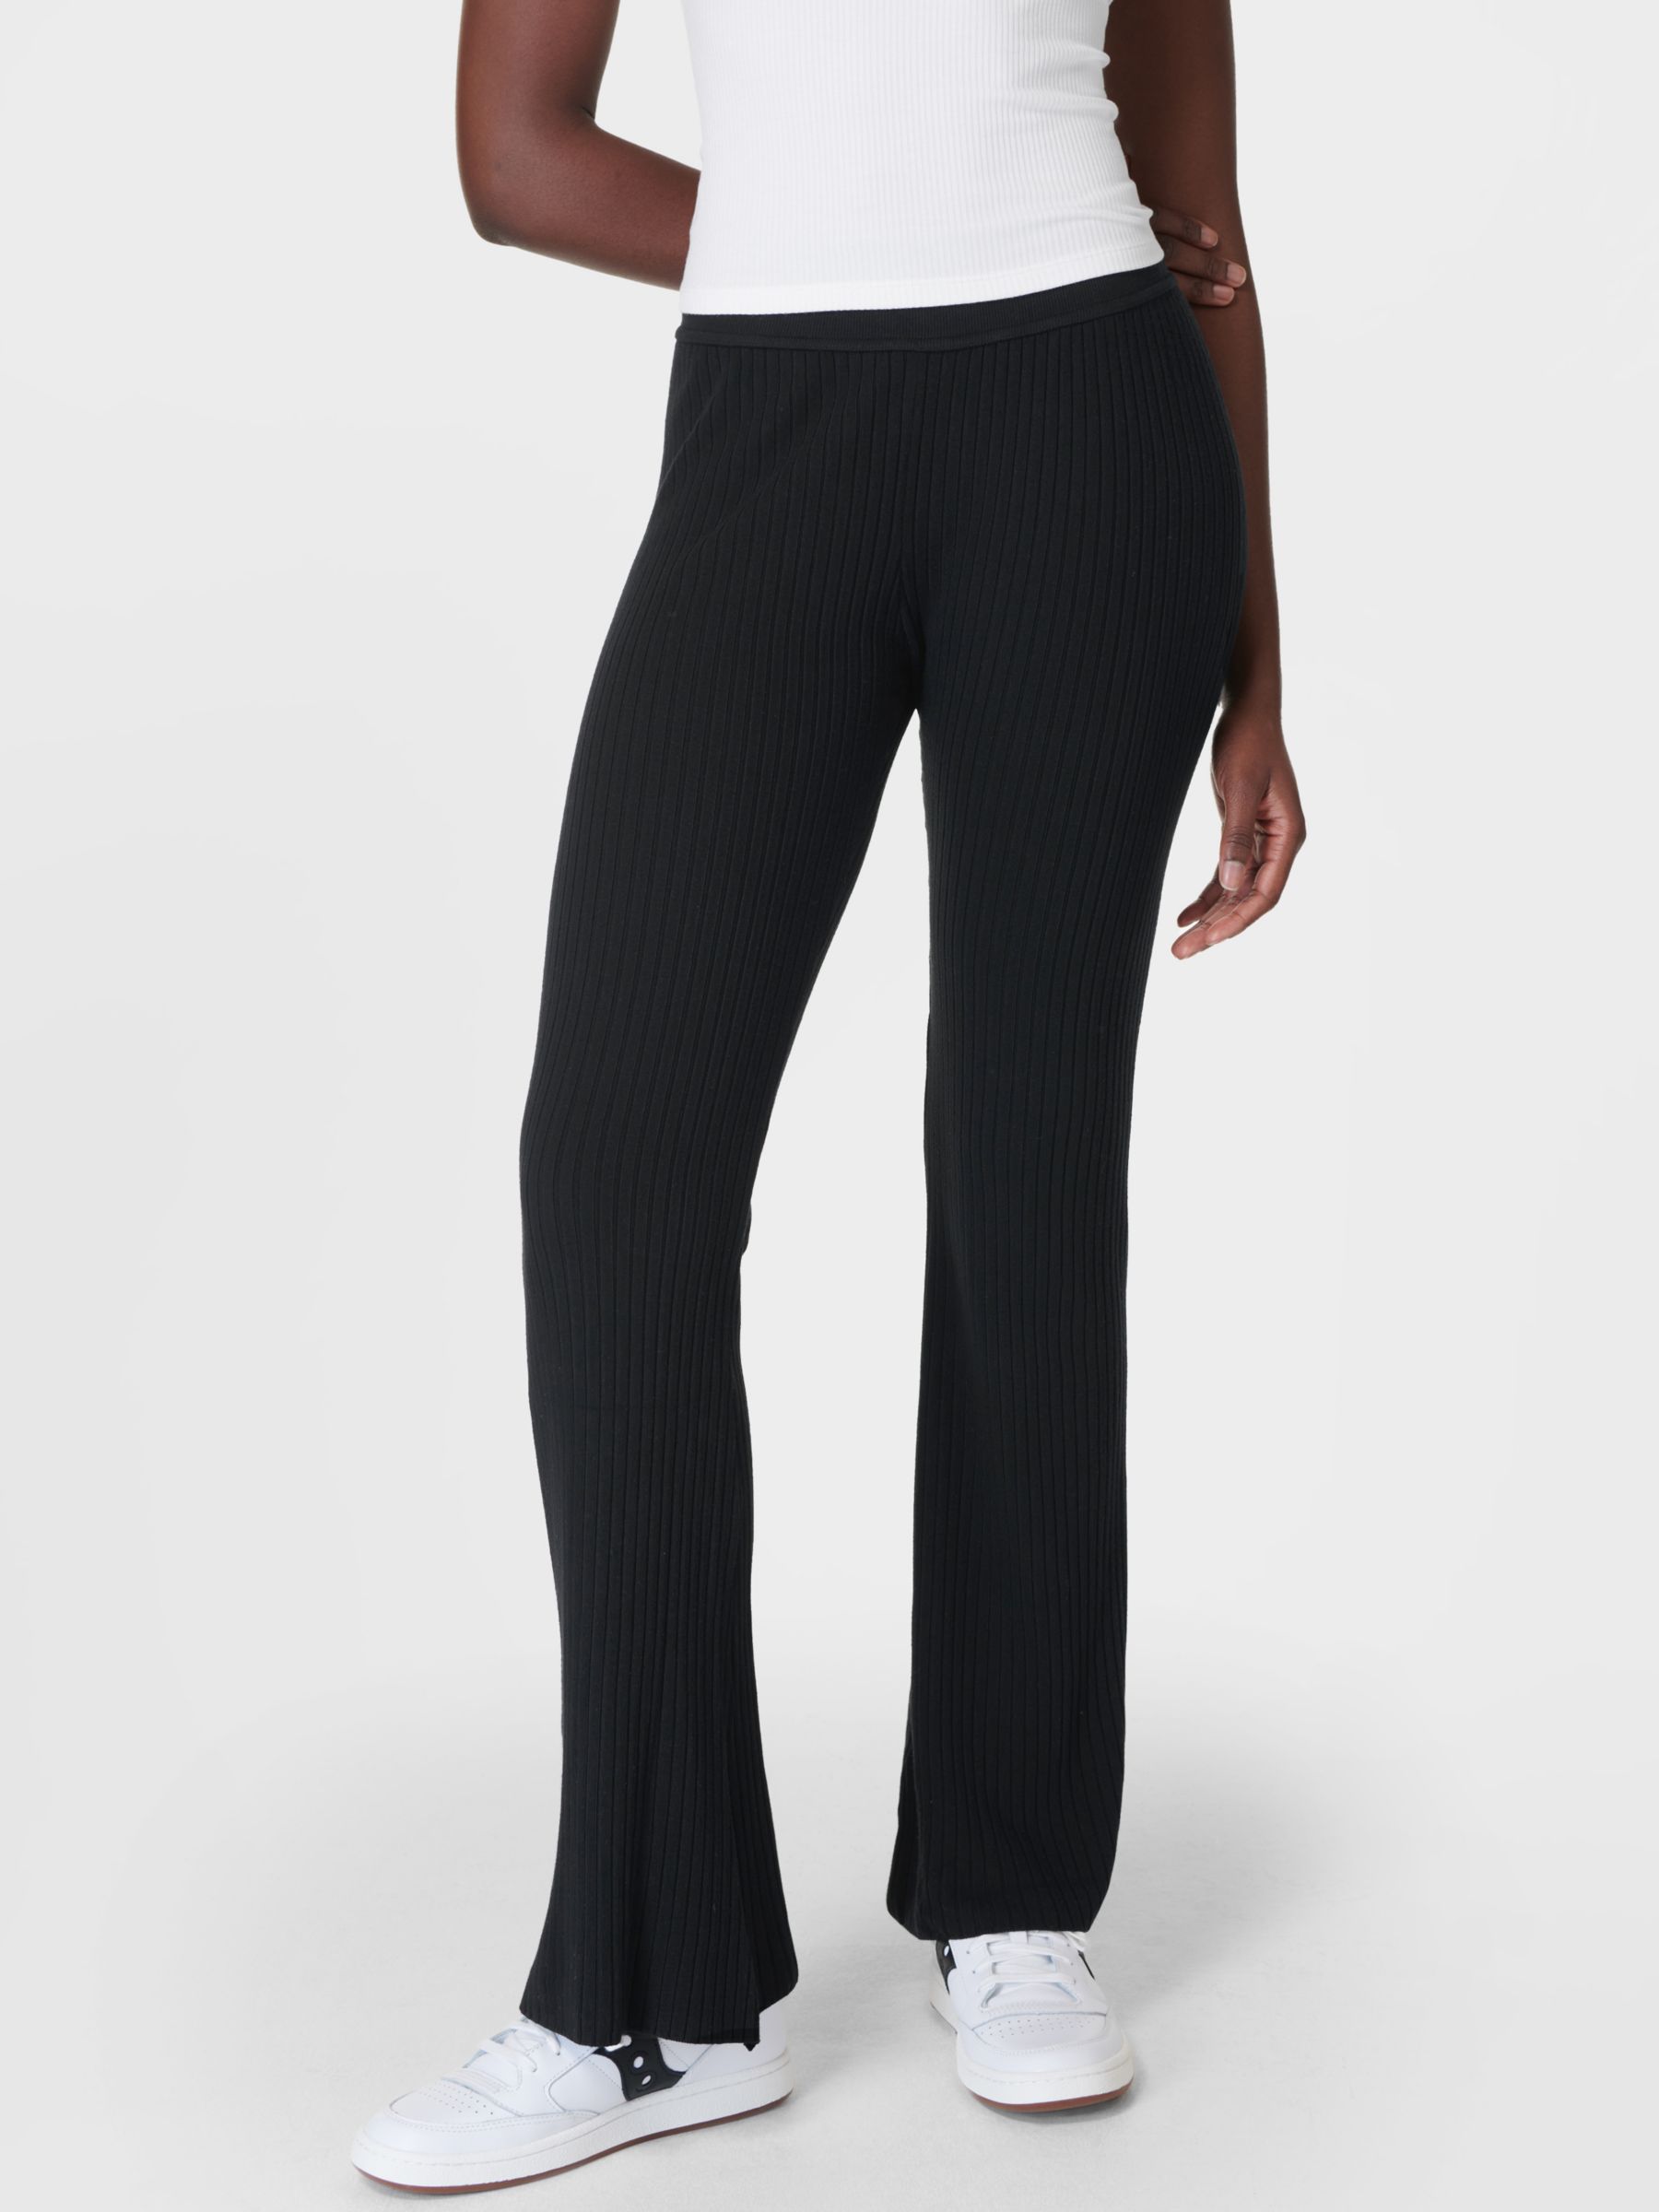 Sweaty Betty Selene Knitted Trousers, Black at John Lewis & Partners